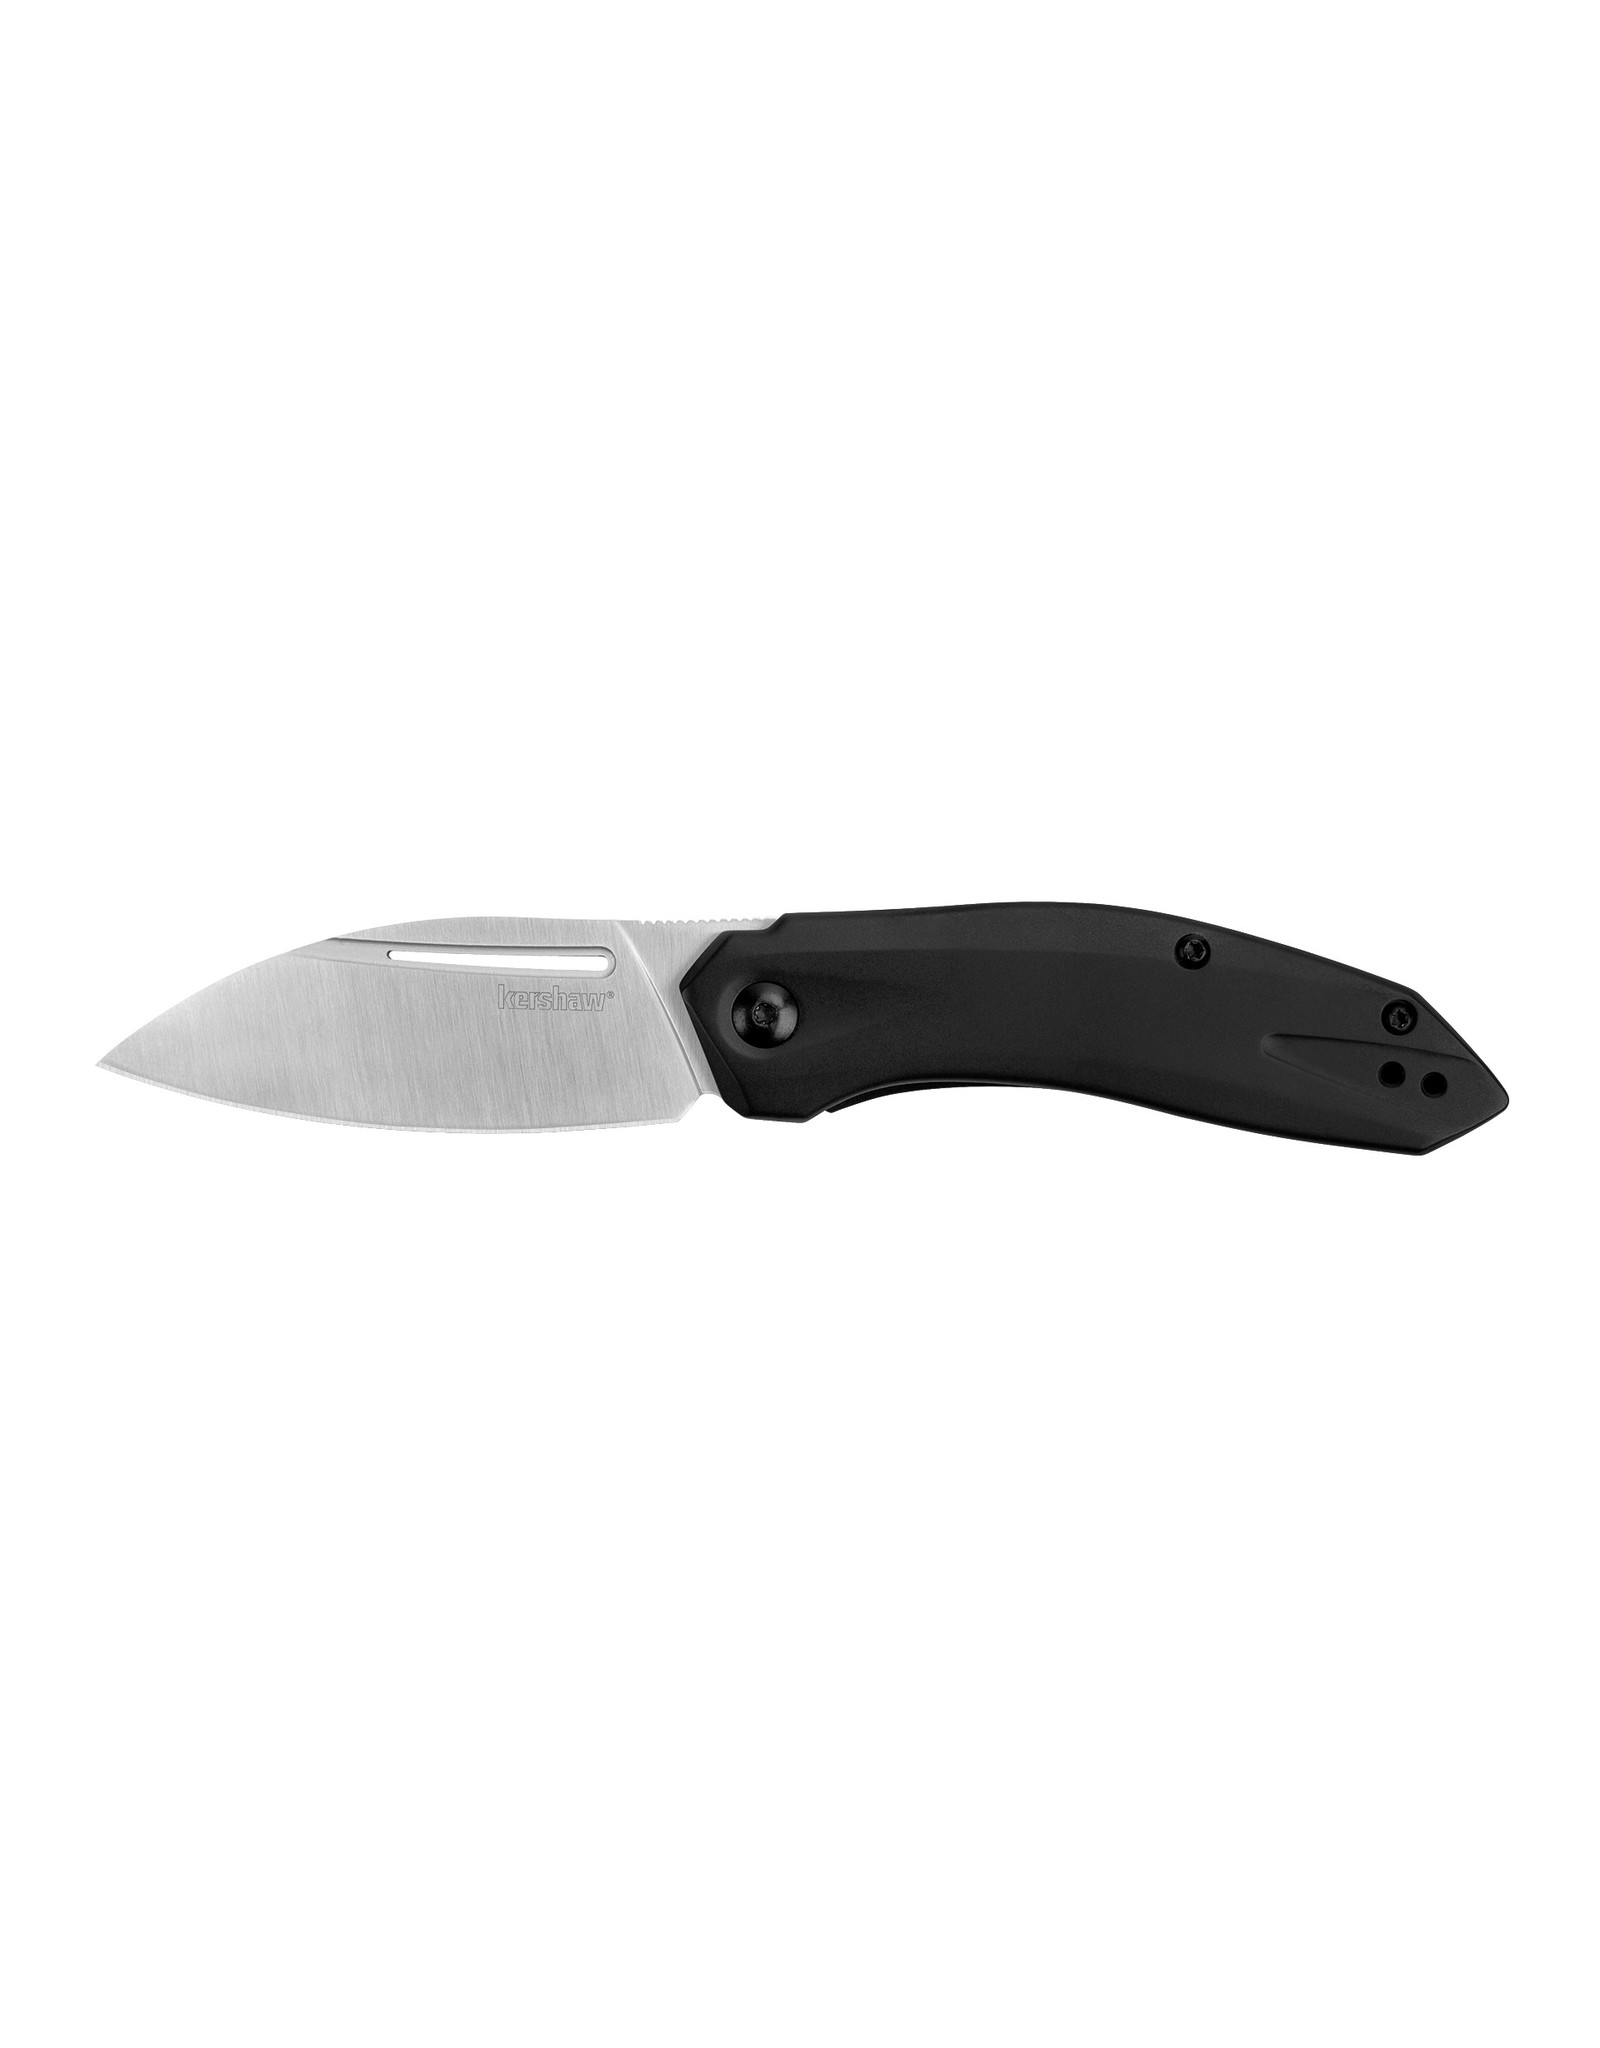 KERSHAW KNIVES TURISMO FOLDING KNIFE